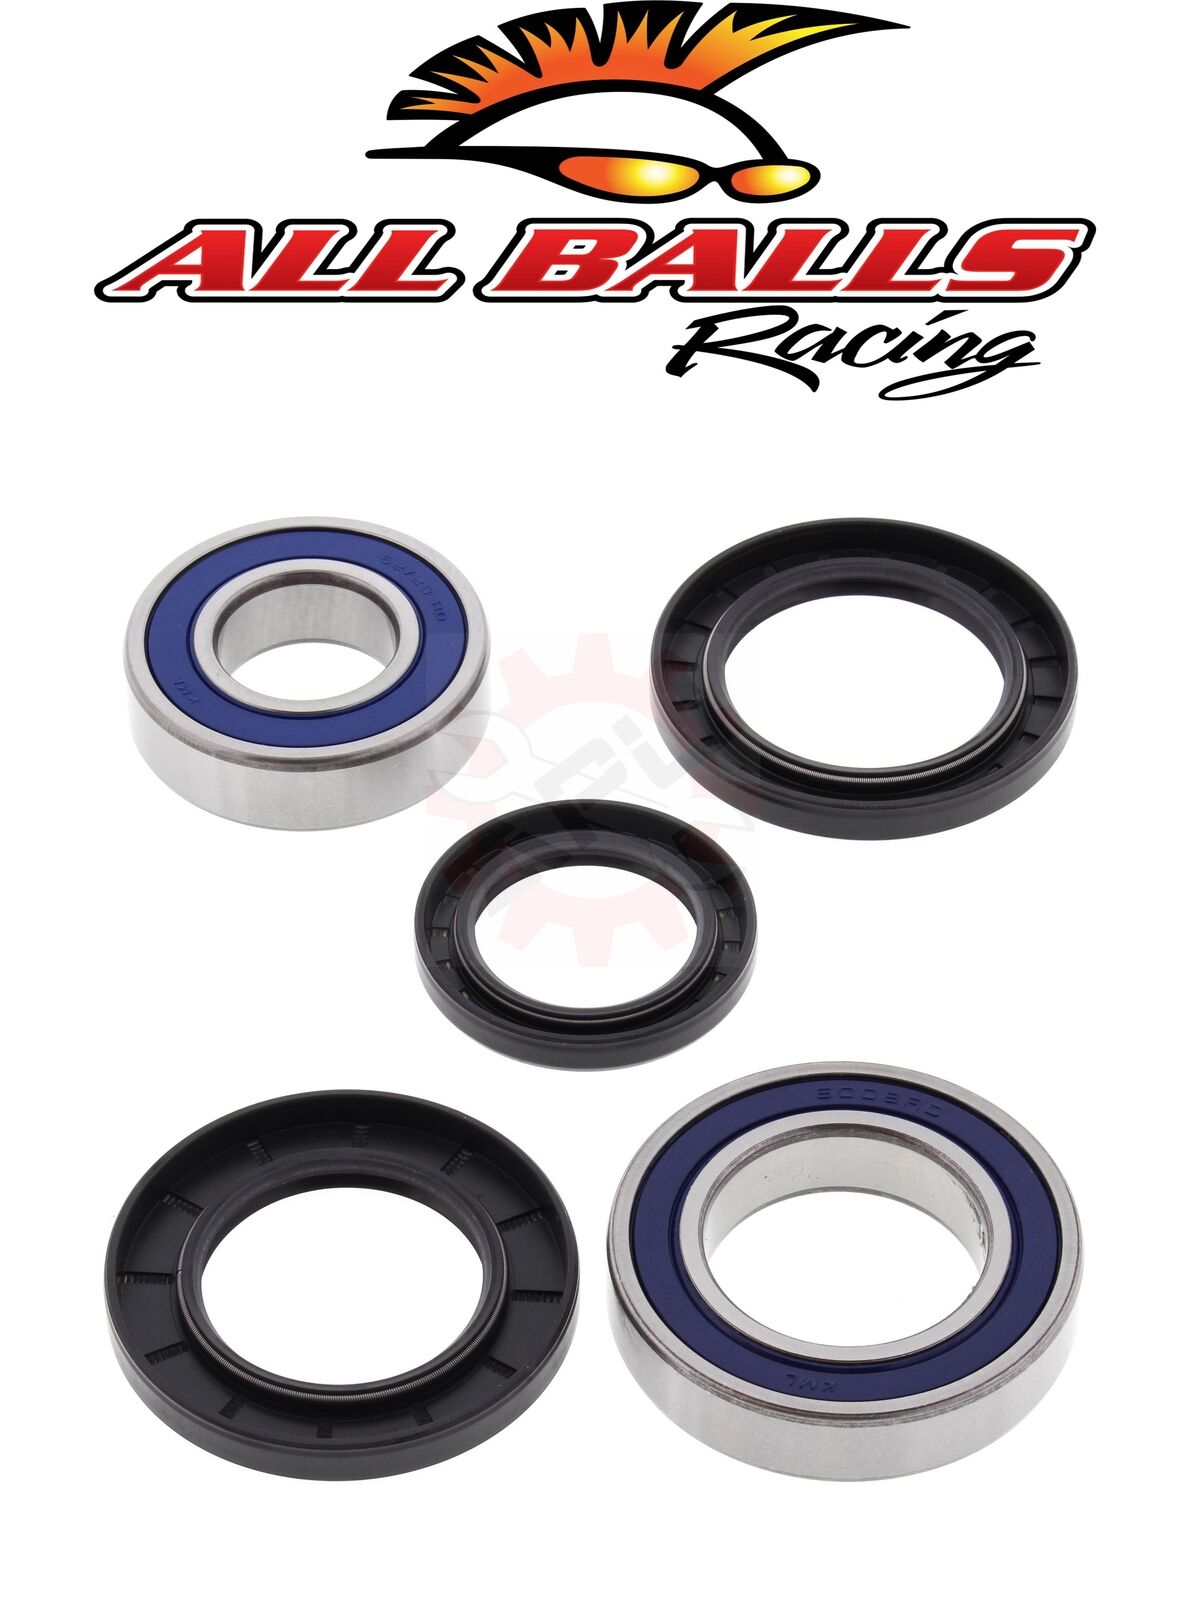 Rear Wheel Bearings 250 Timberwolf 2x4 92-98/4x4 94-00 Yamaha ALL BALLS